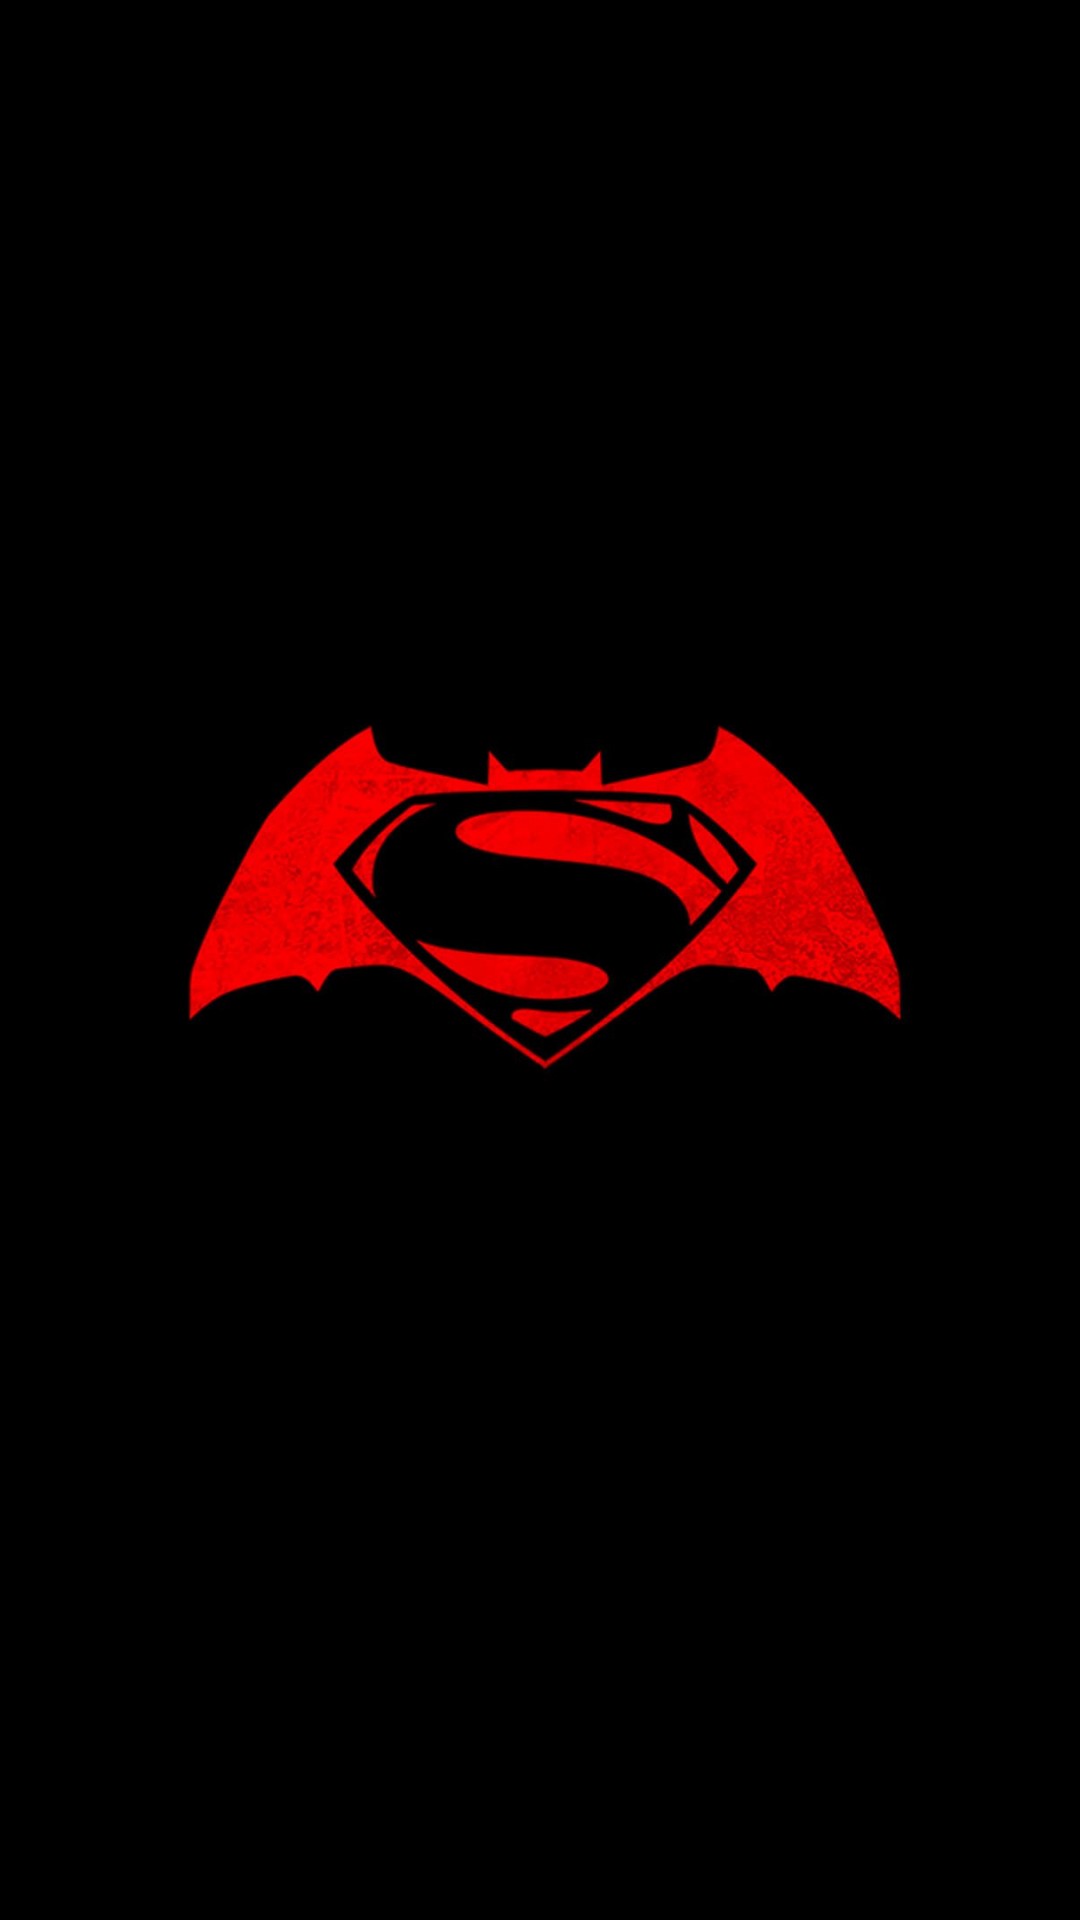 Batman v Superman logo Wallpaper for HTC One